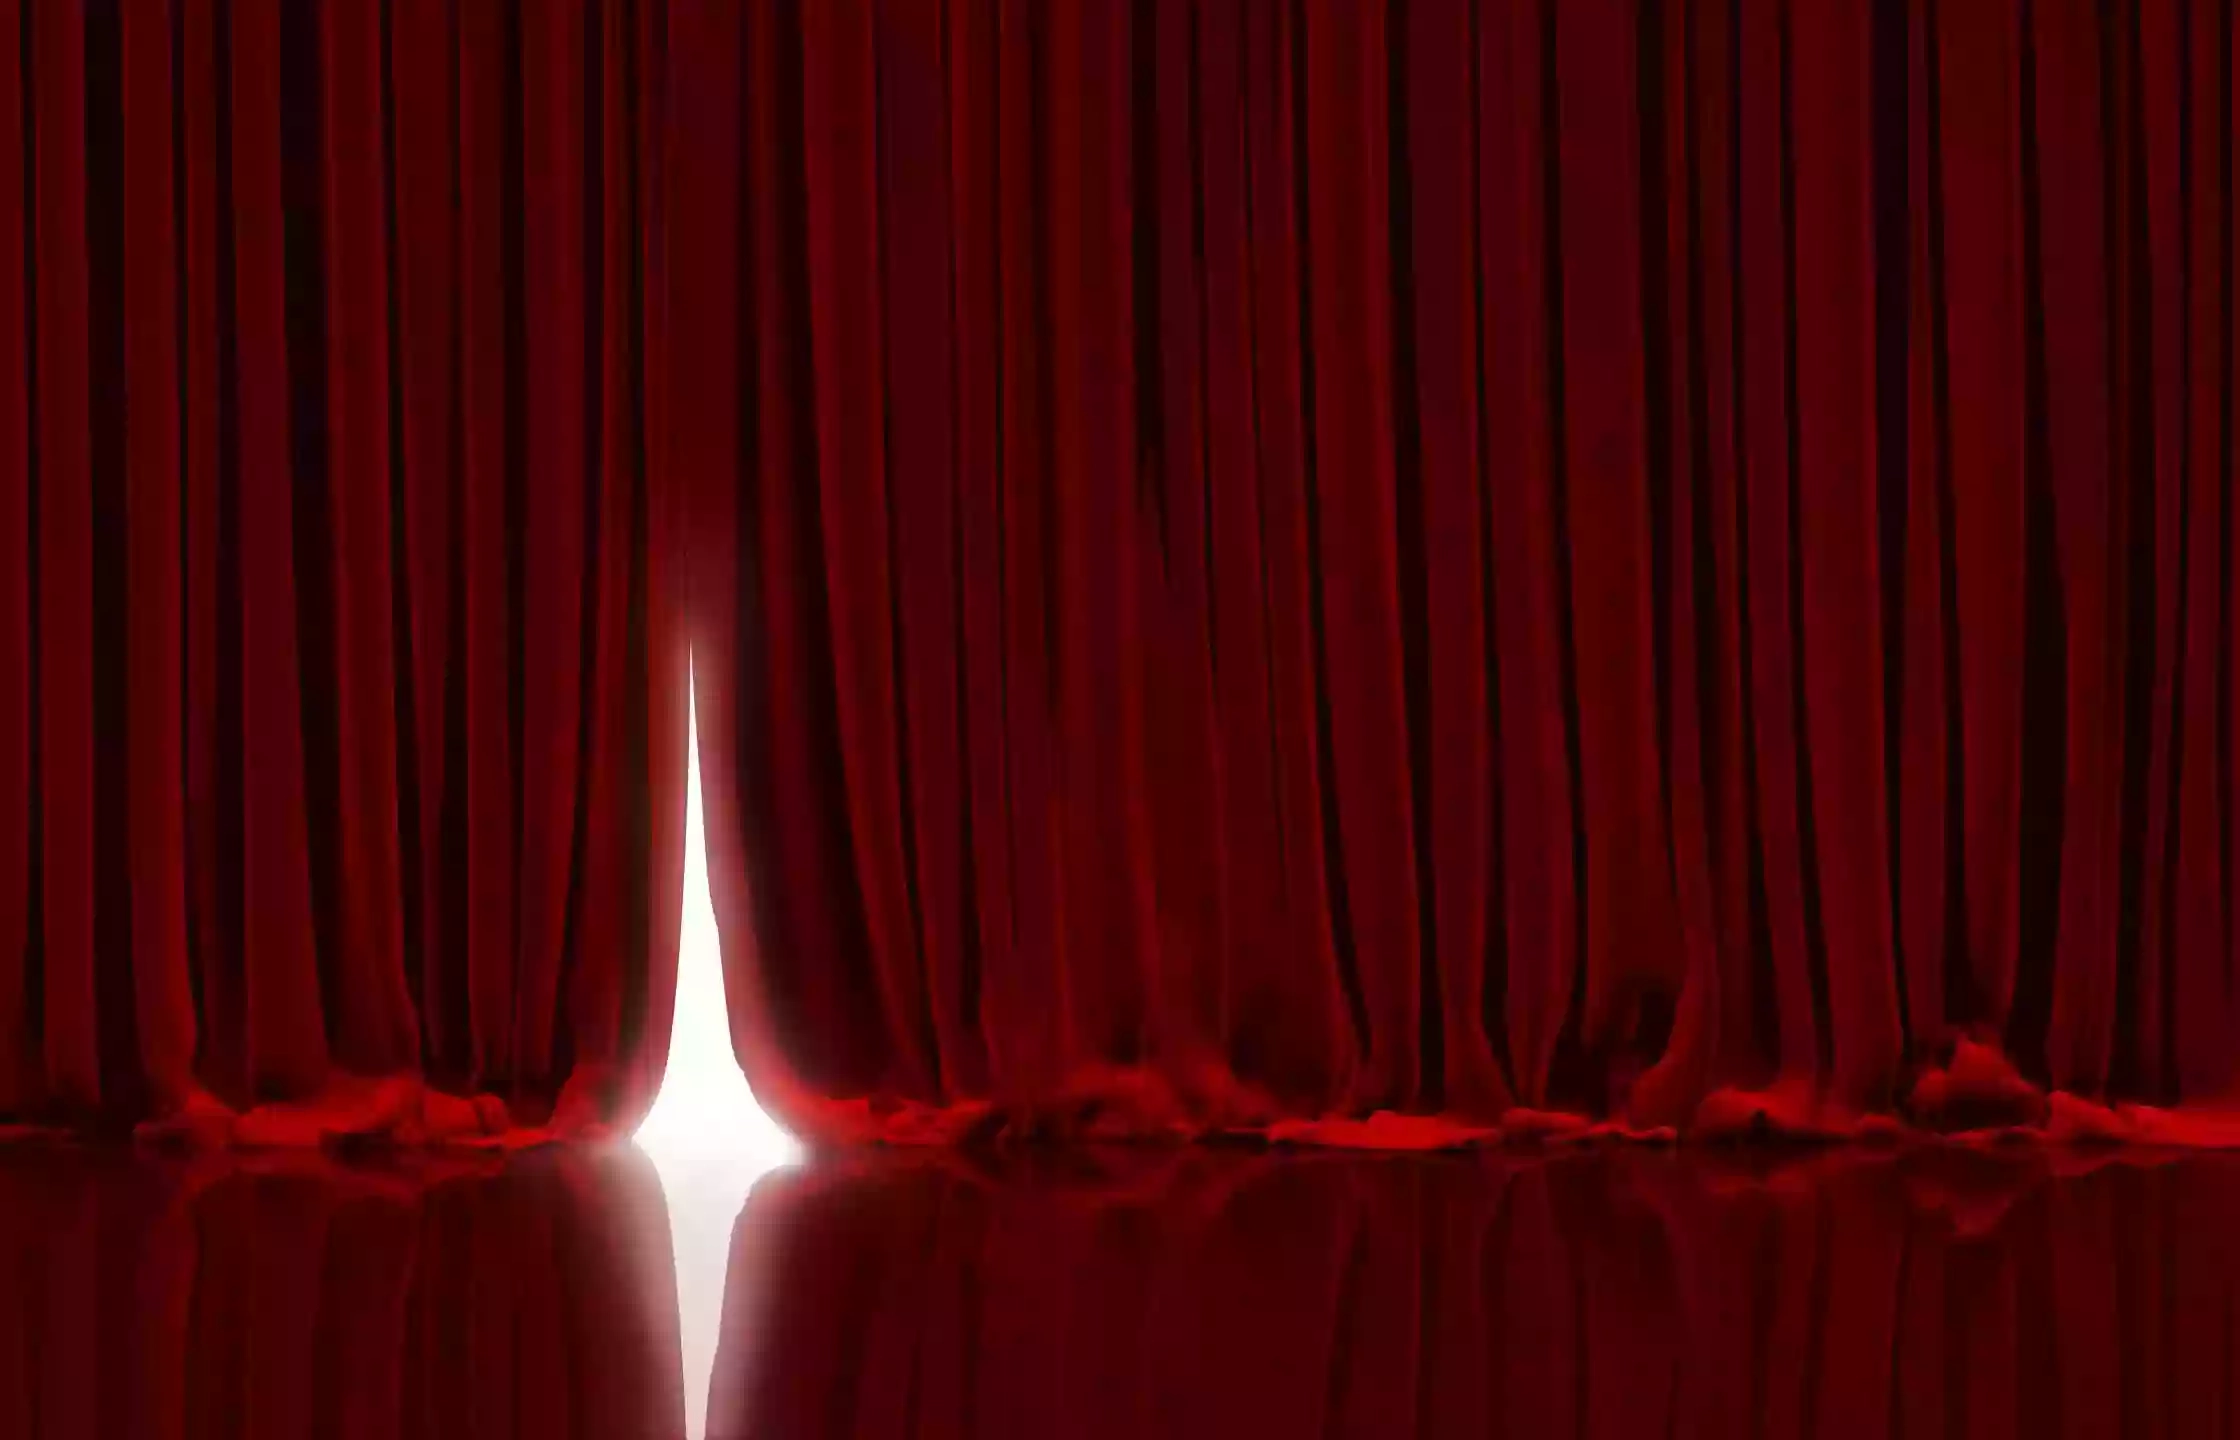 Curtain Up Speech & Drama Education